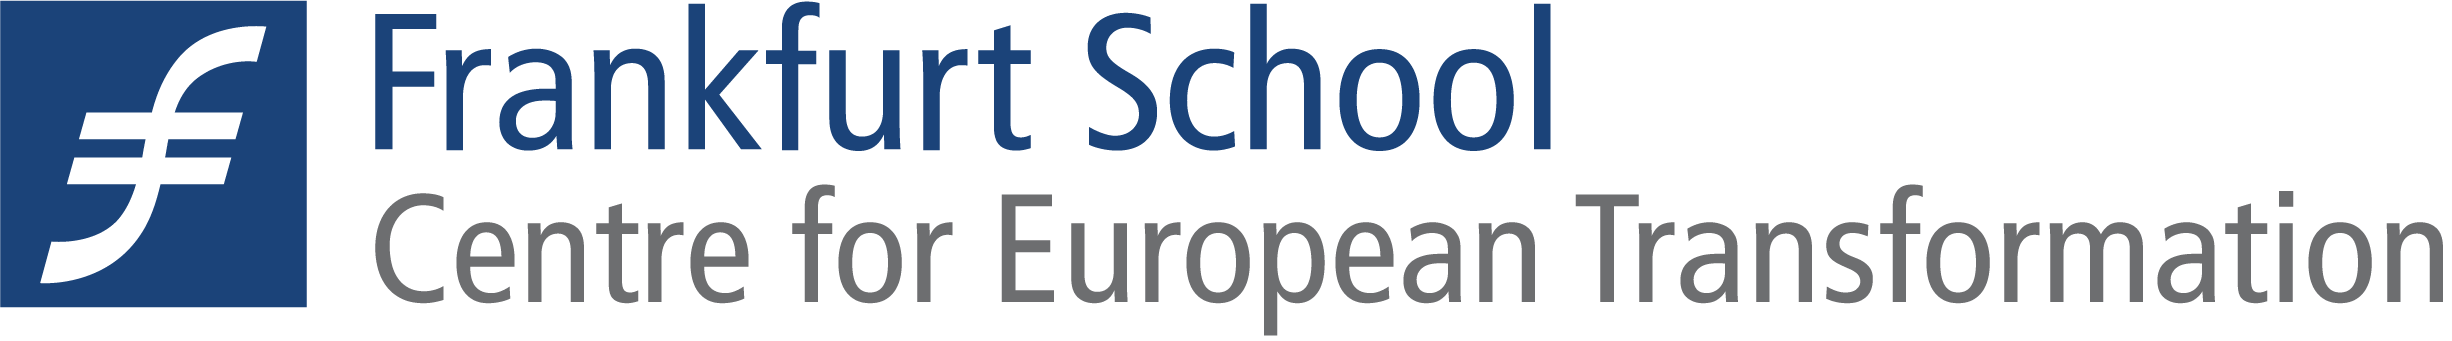 Logo_FS_Centre for European Transformation.png